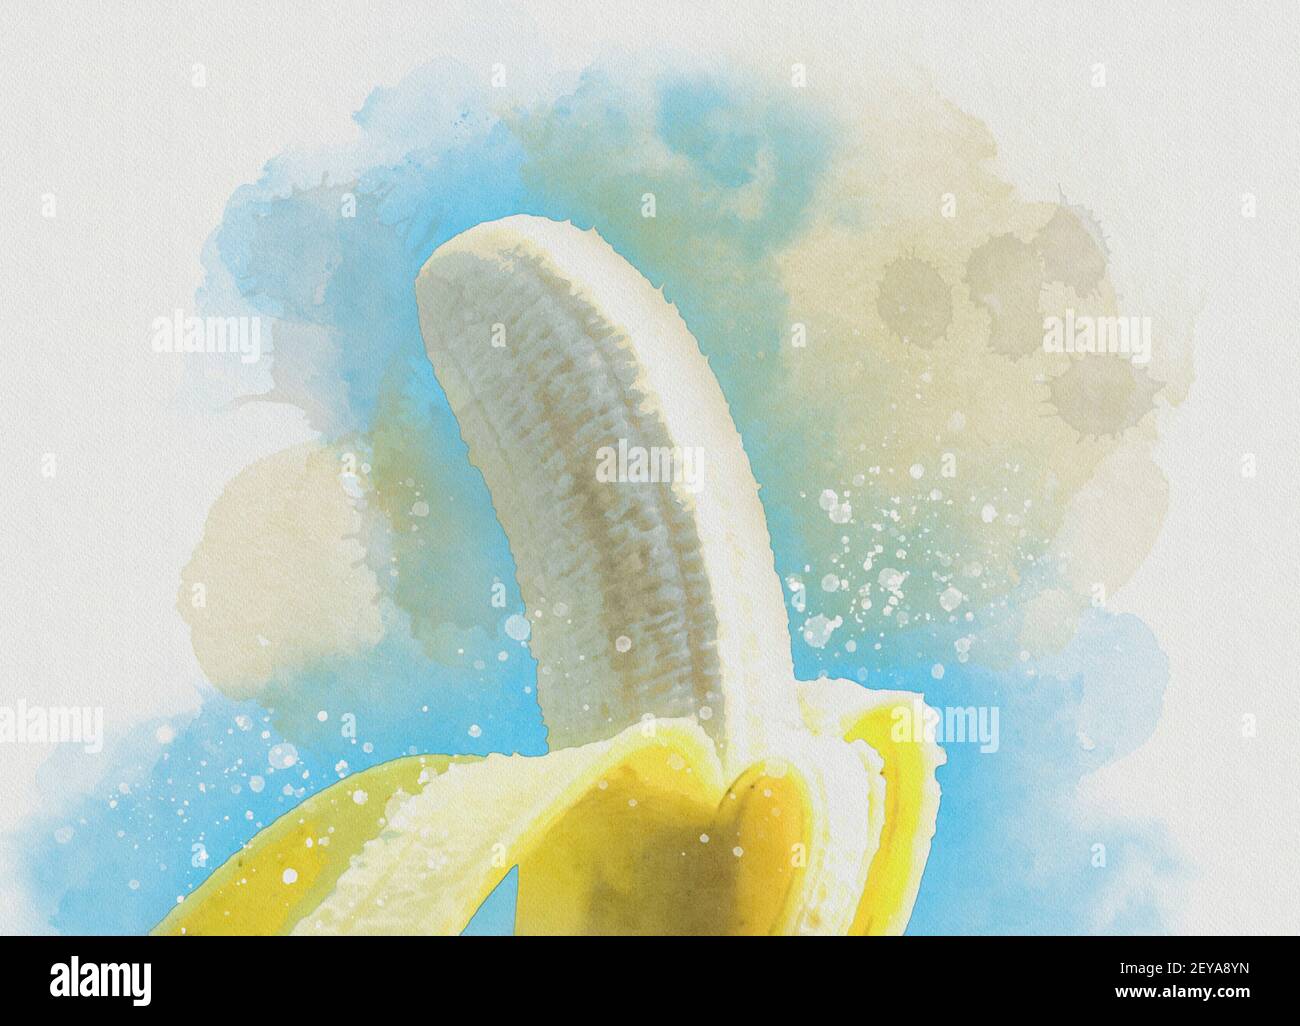 Peeled banana, illustration Stock Photo